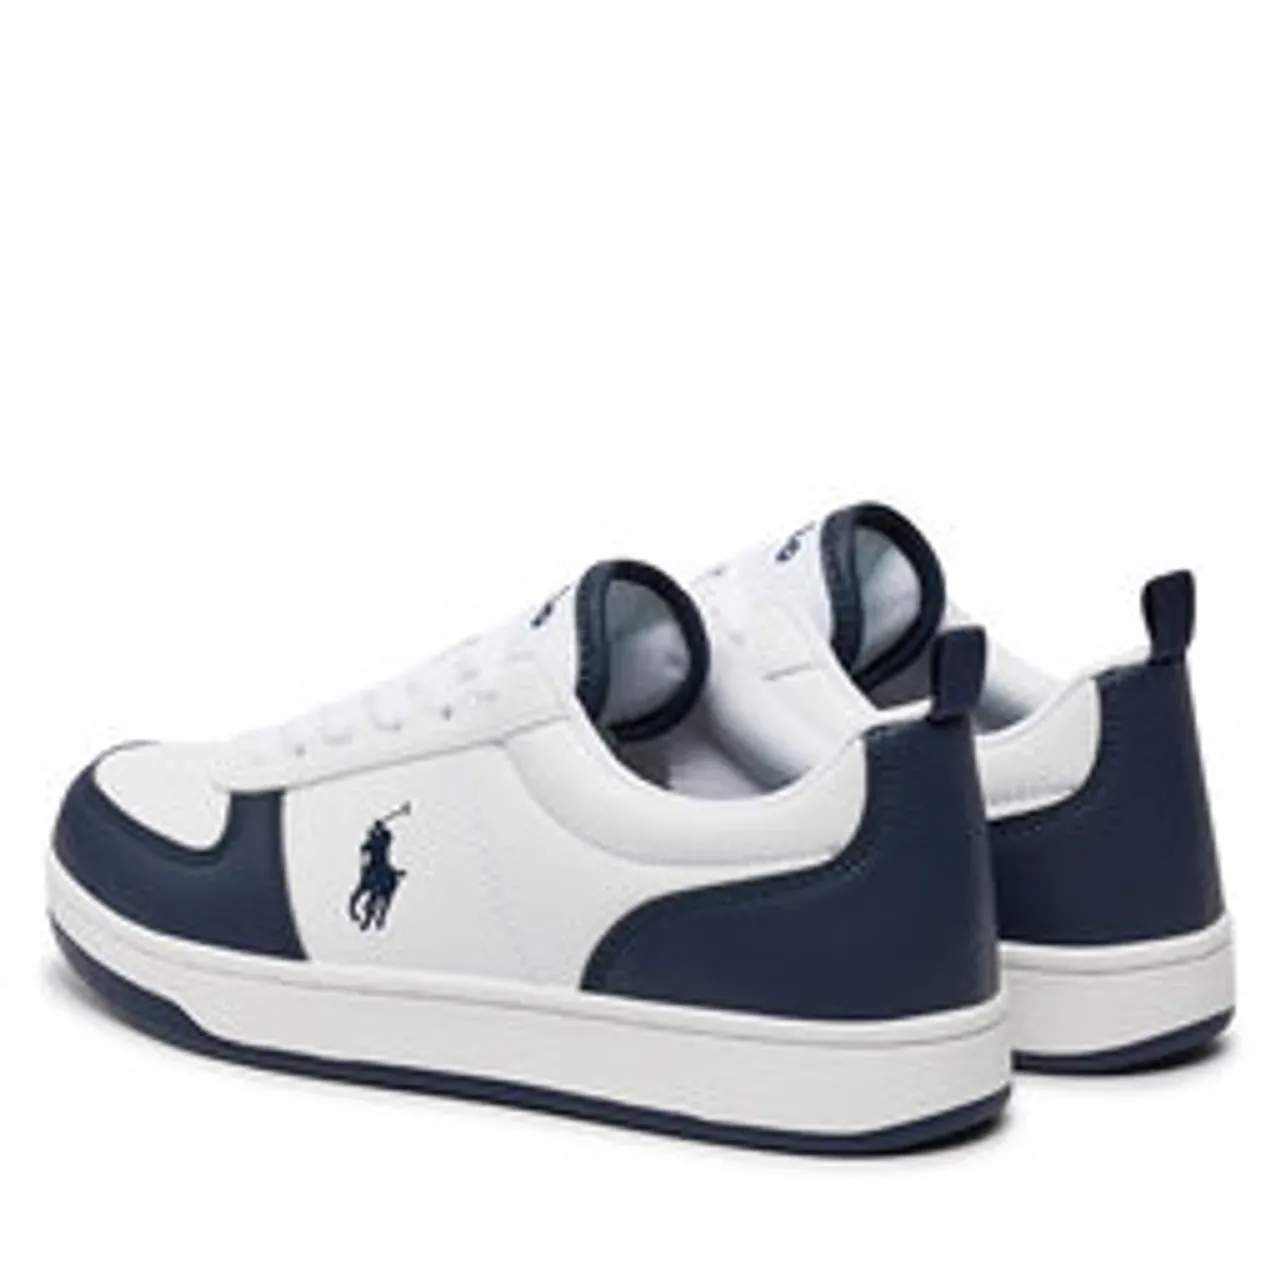 Sneakers Polo Ralph Lauren RL00600111 J White Tumbled/Navy